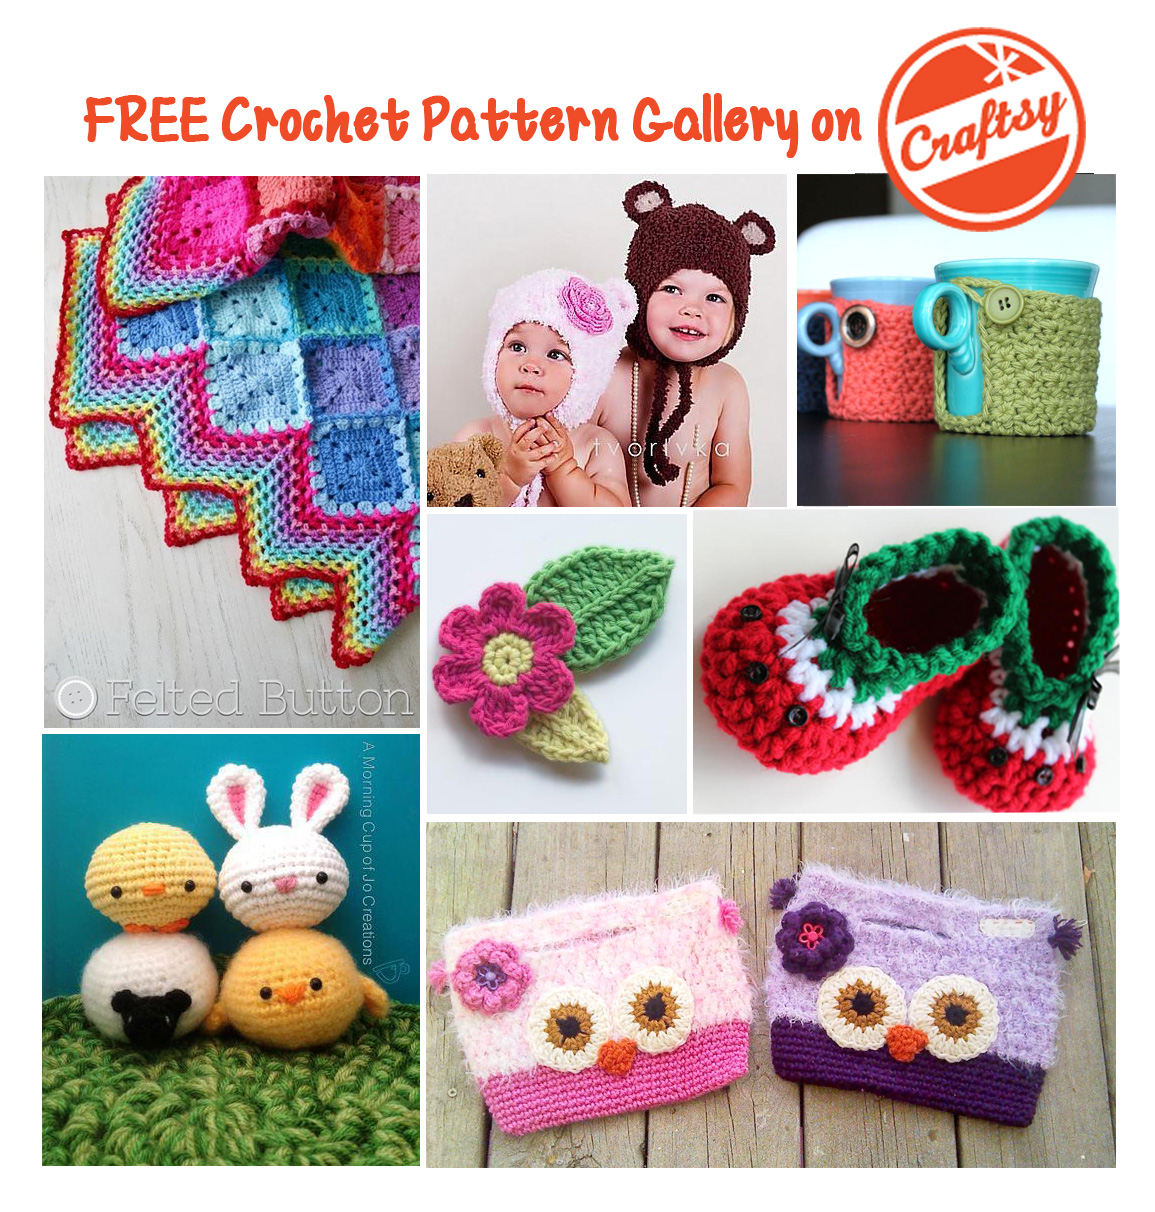 Free Crochet Patterns Archives » cRAfterchick - Free Crochet